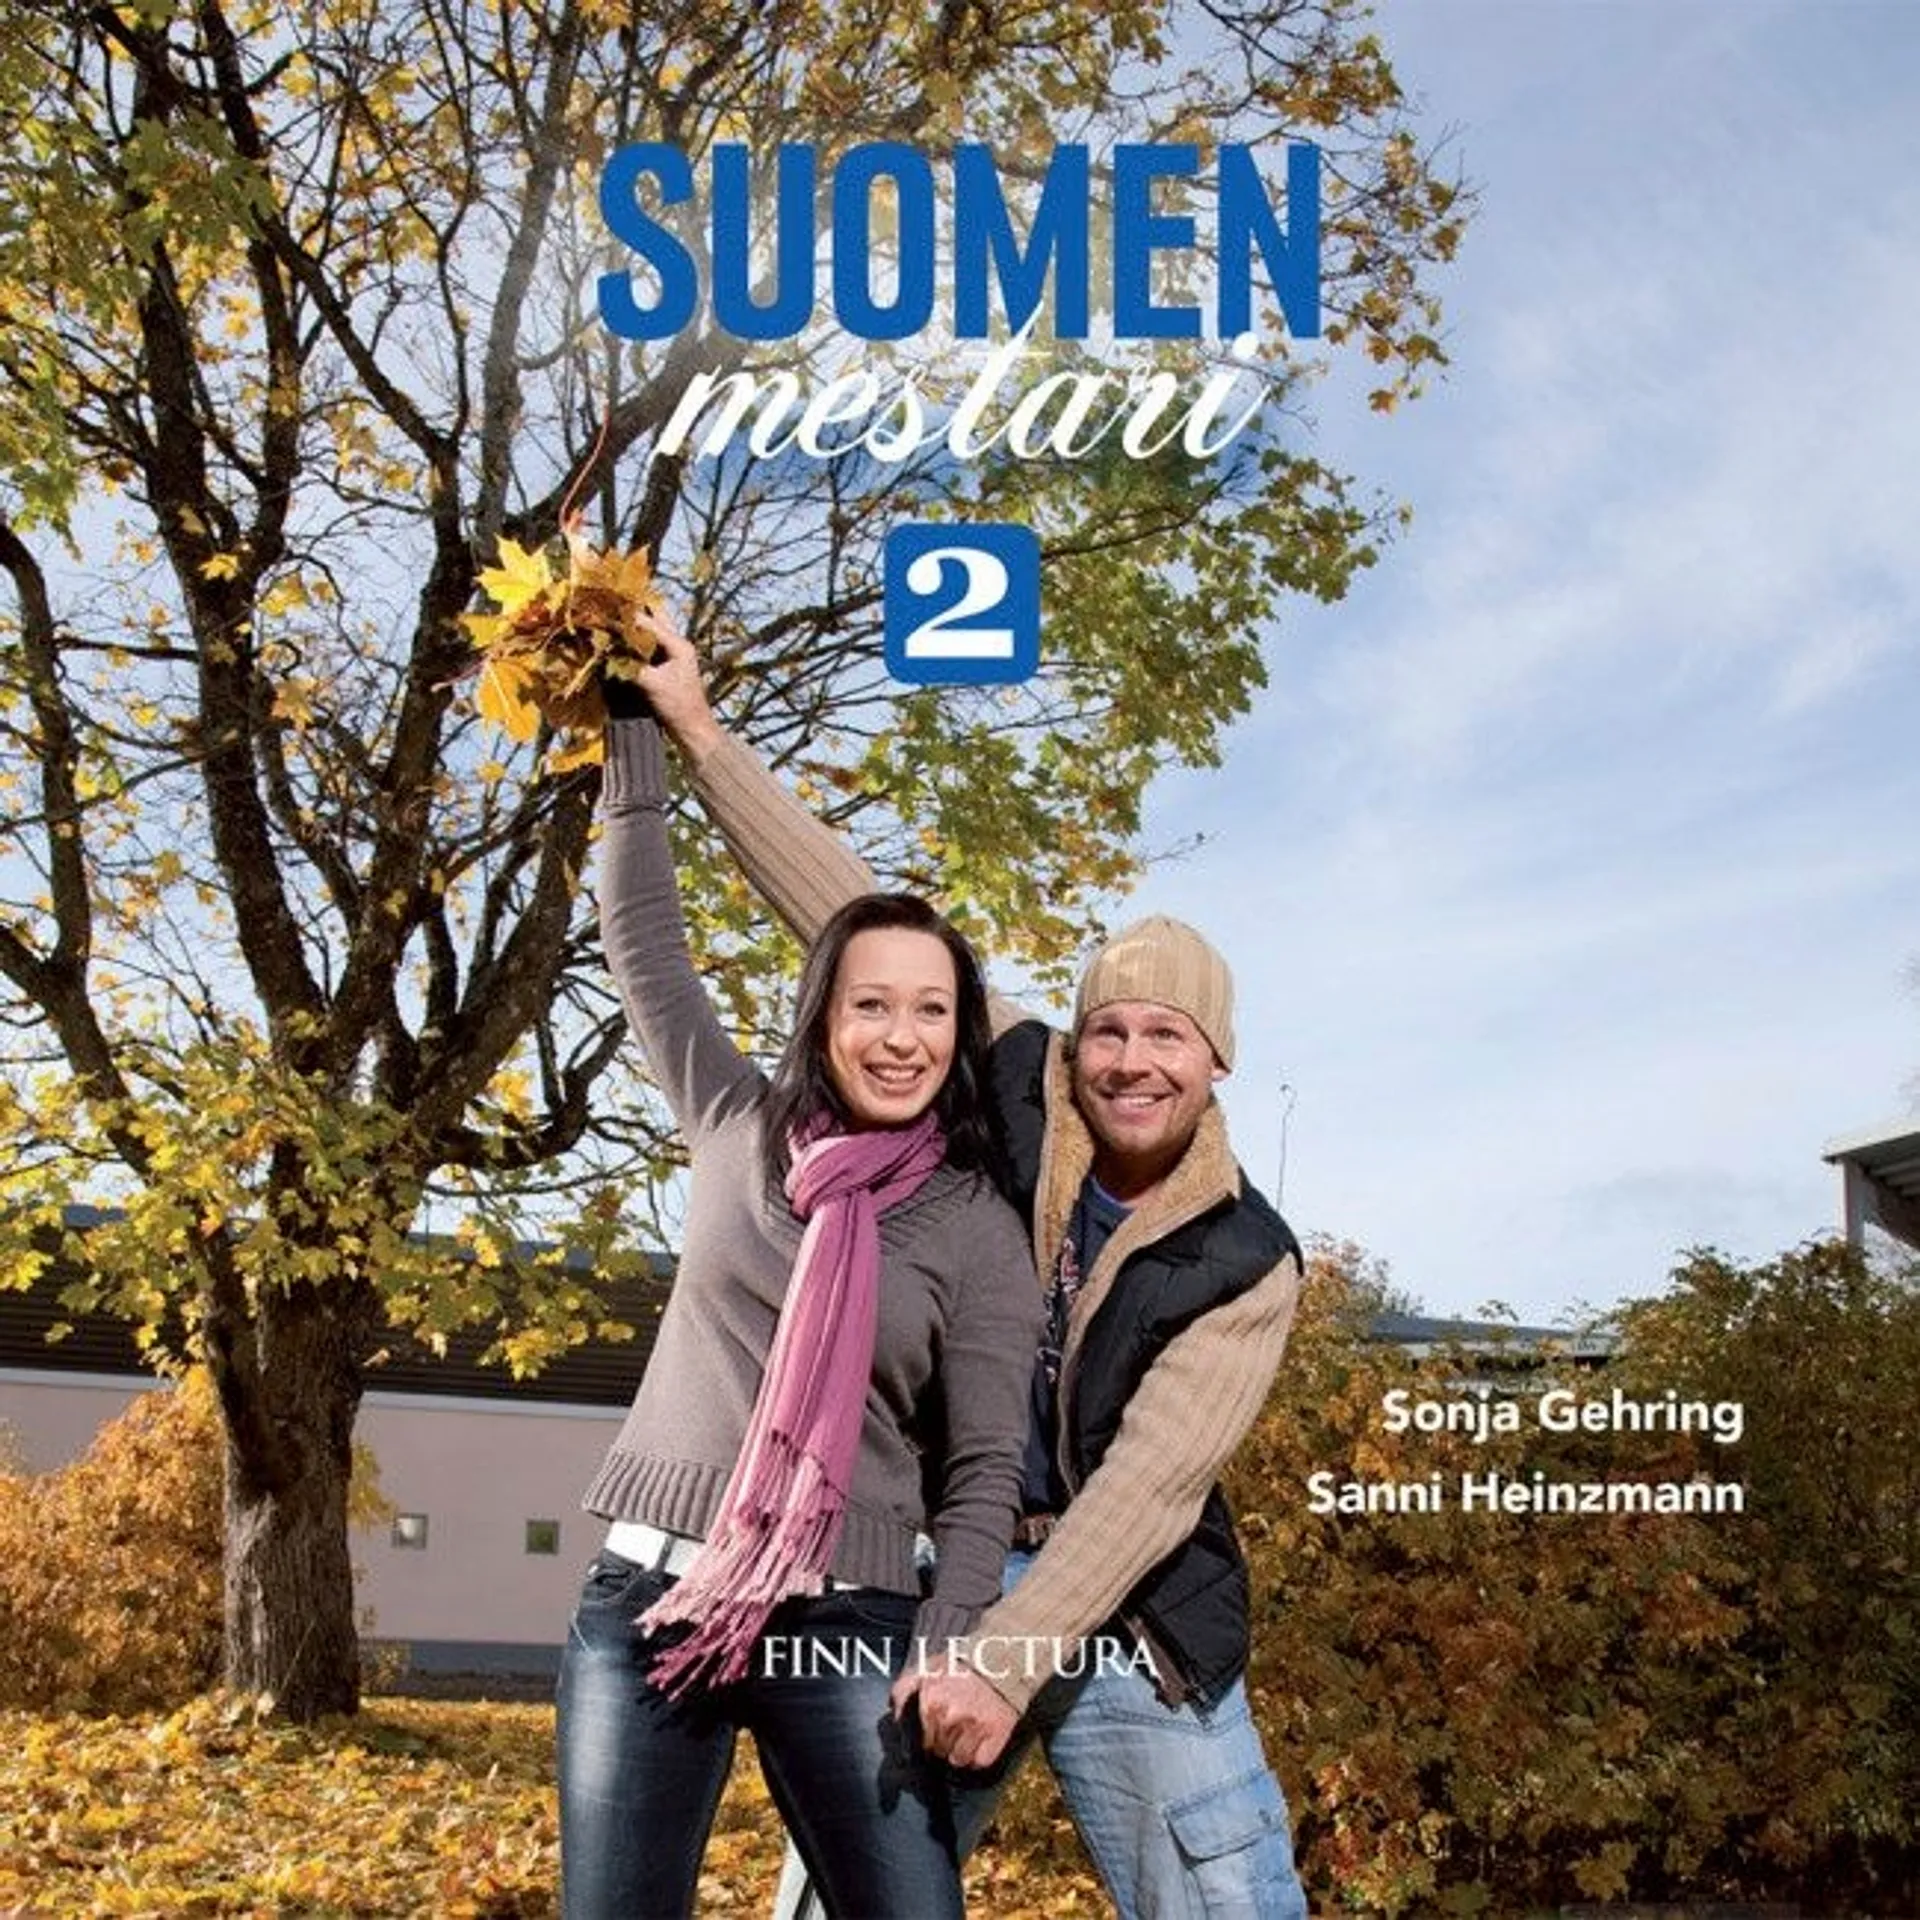 Gehring, Suomen mestari 2 CD